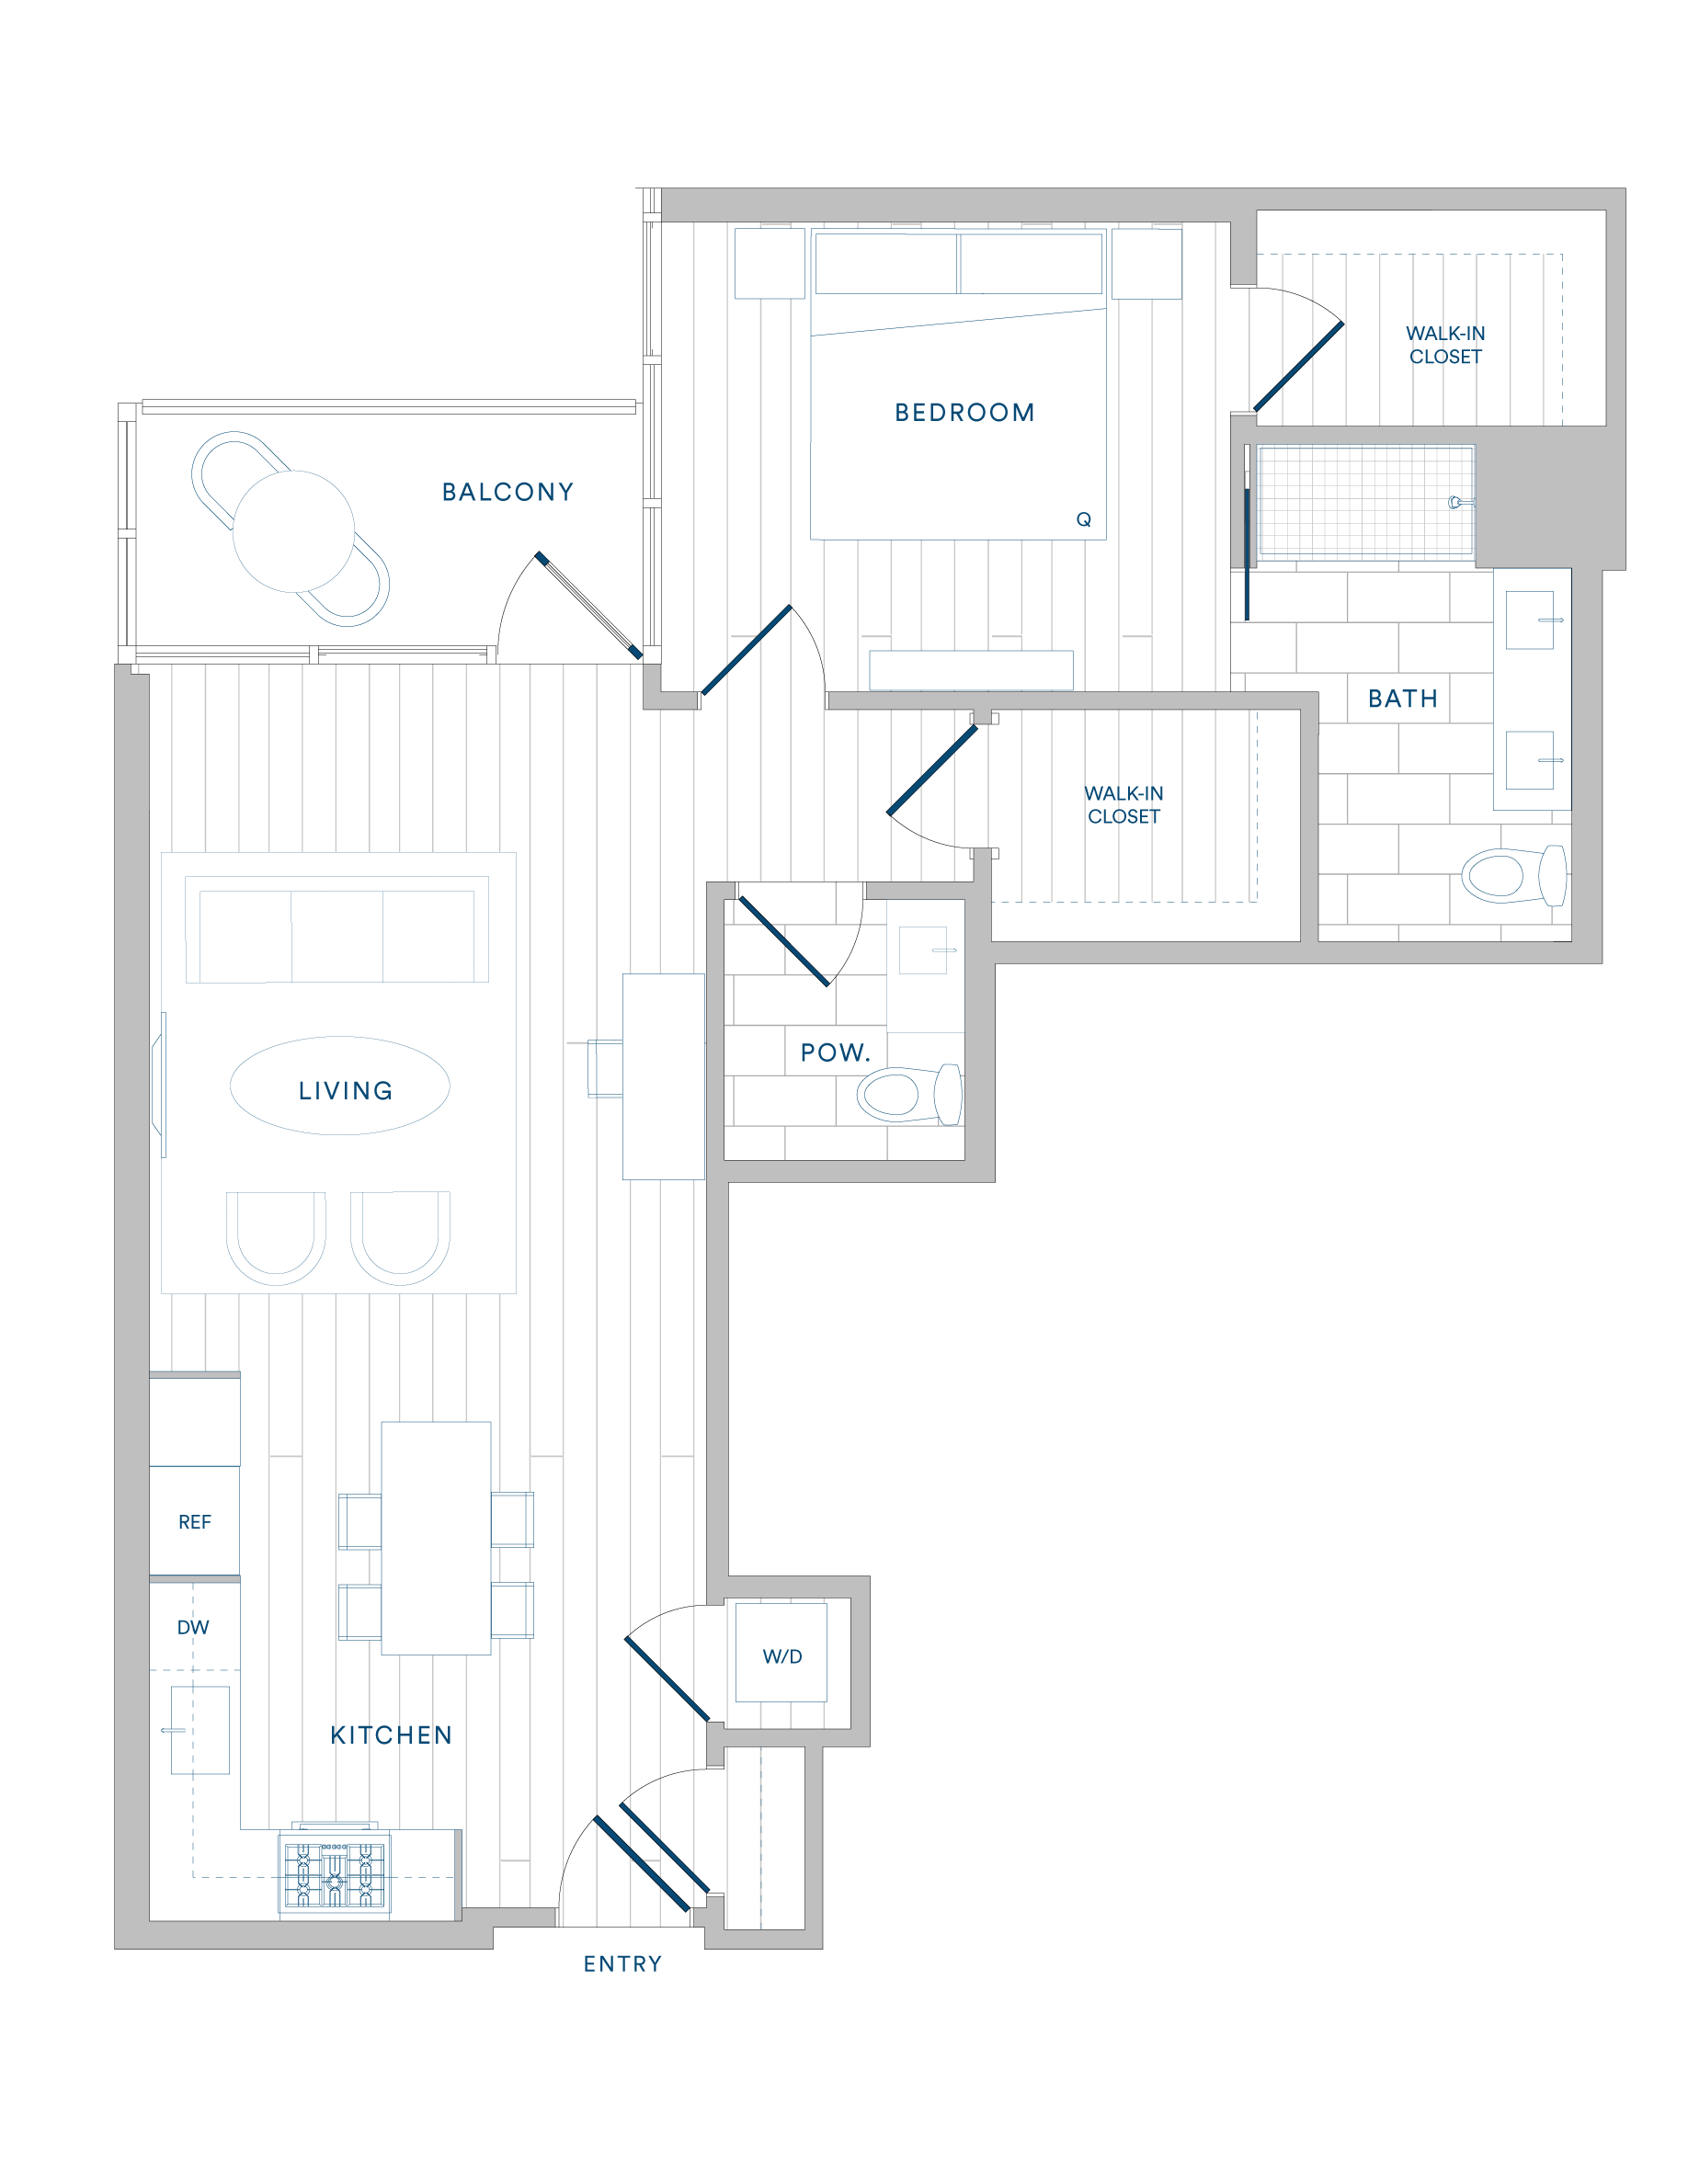 Floorplan for Apartment #1120, 1 bedroom unit at Margarite